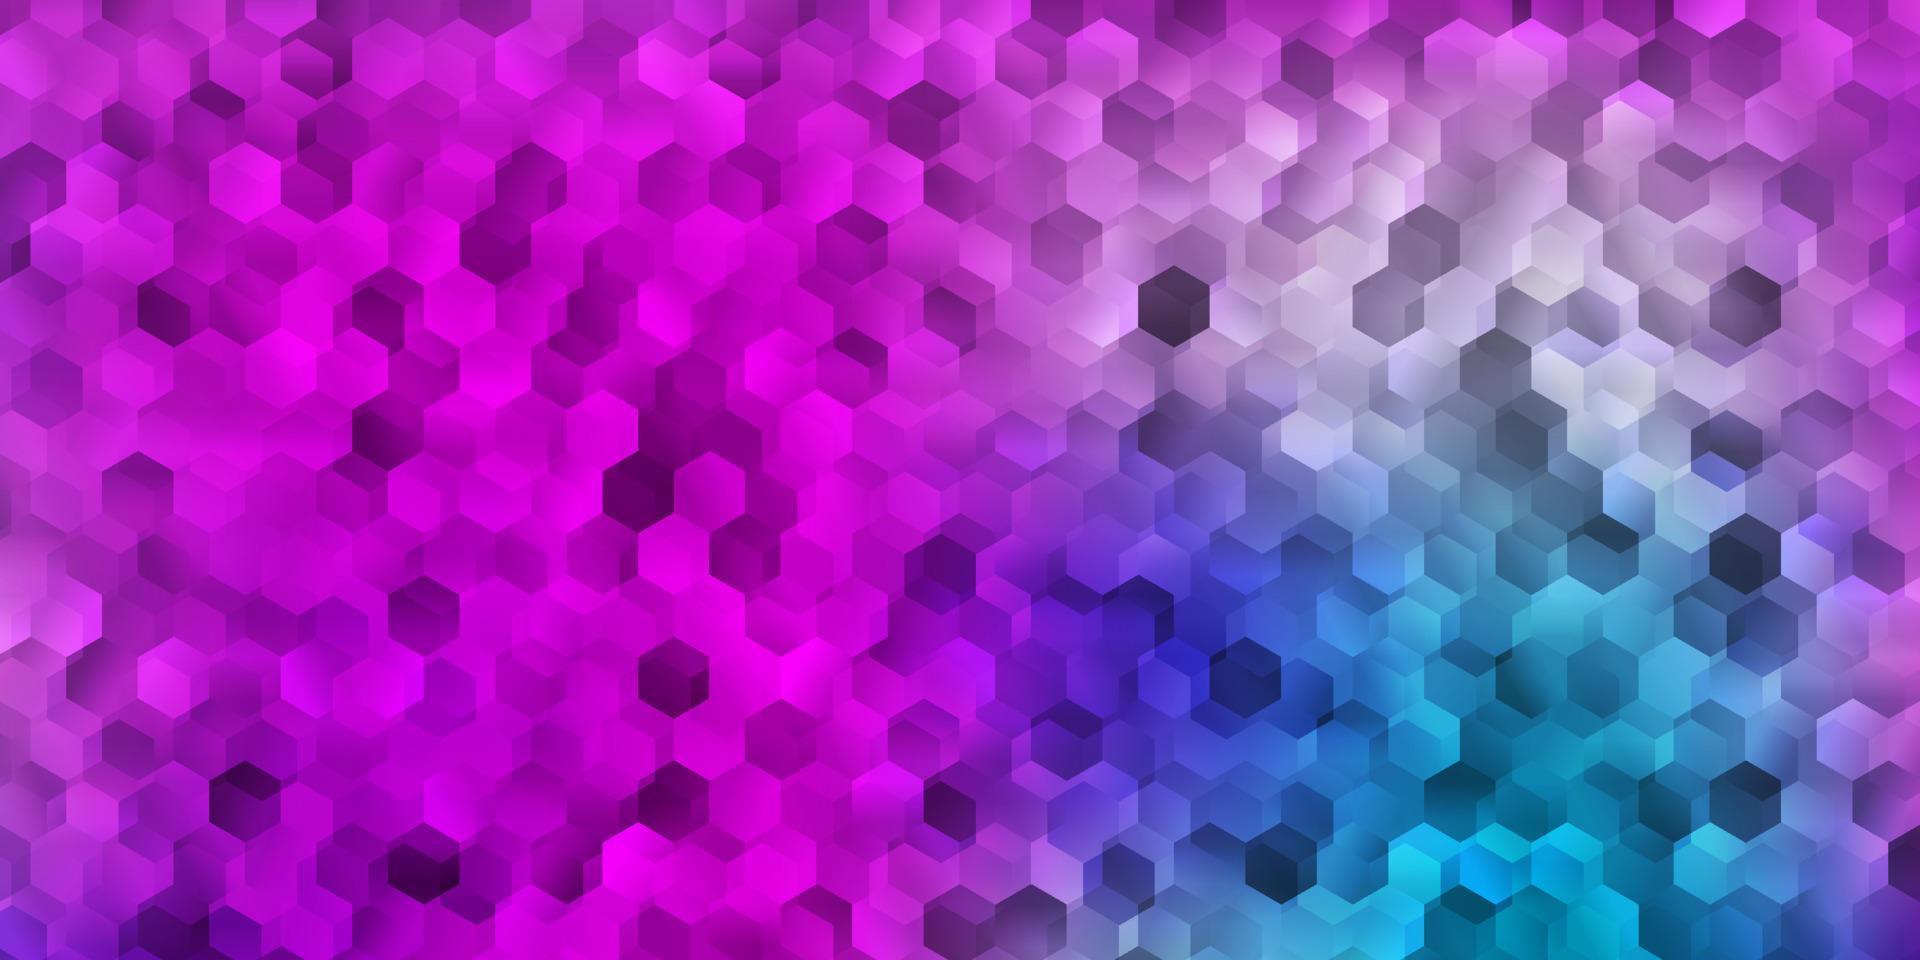 plantilla de vector de color rosa claro, azul en un estilo hexagonal.